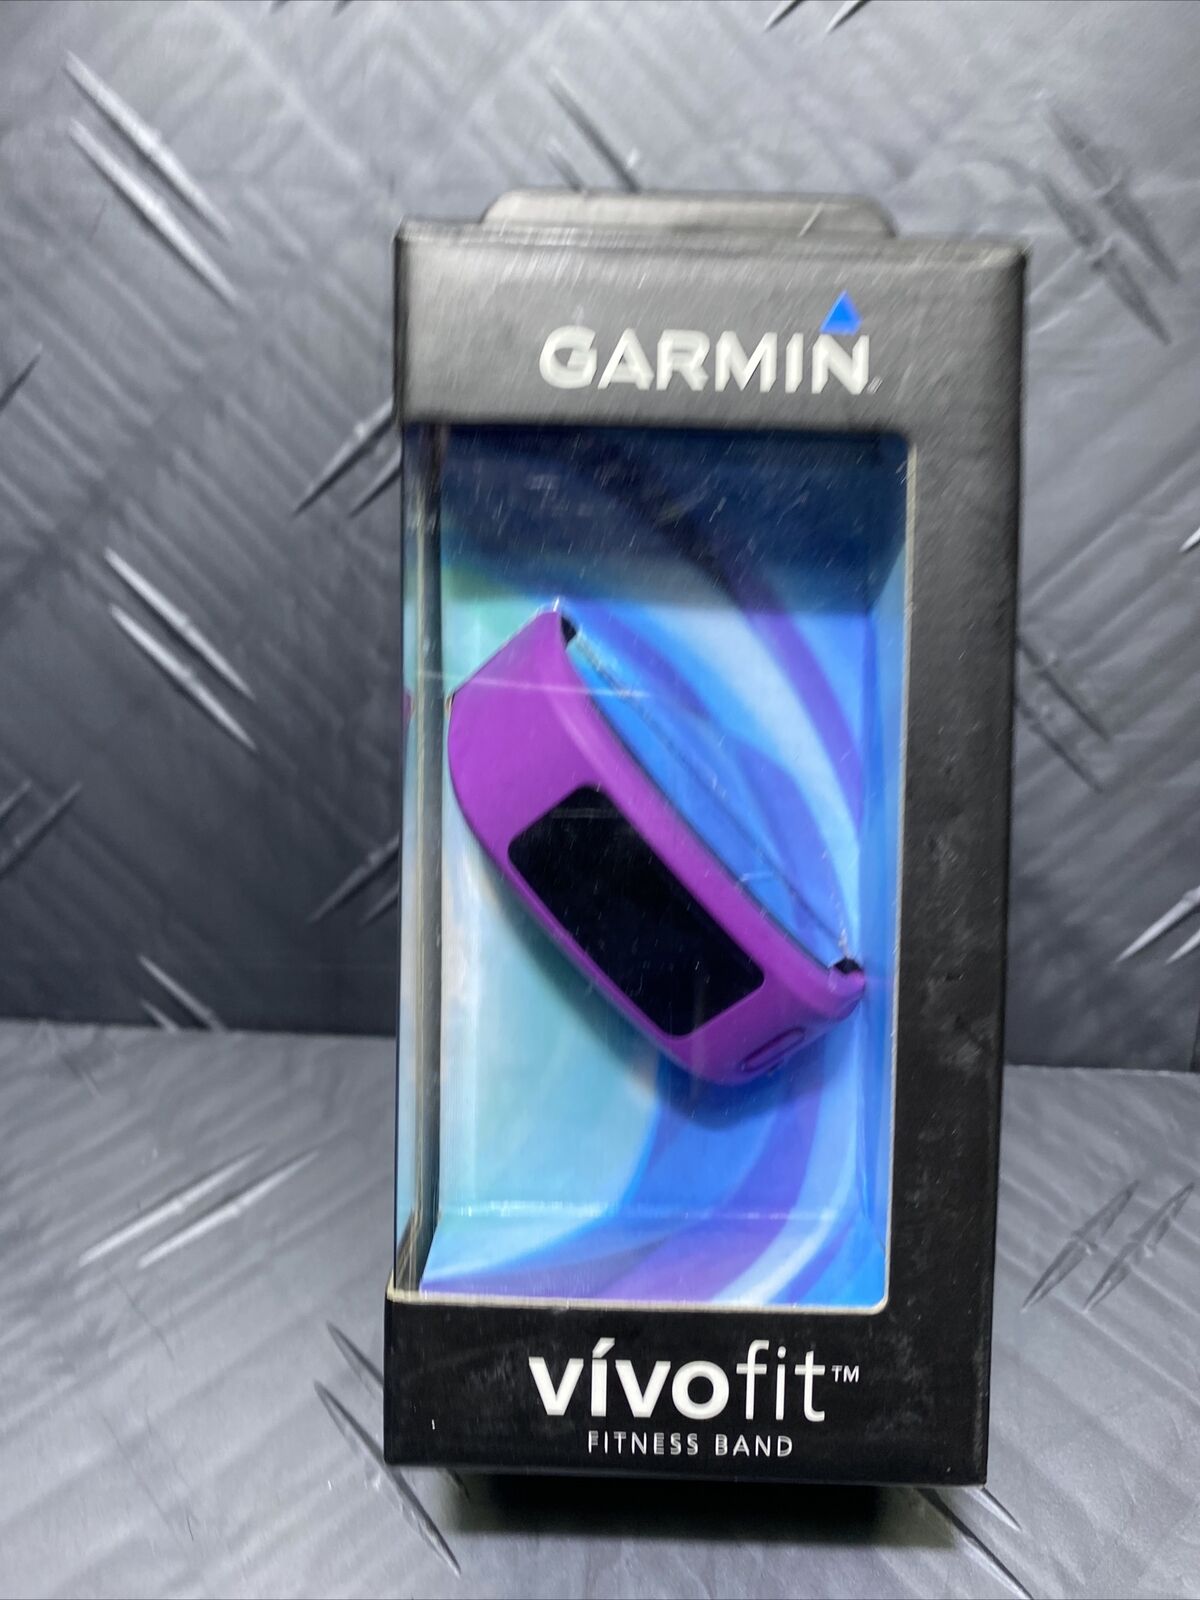 Garmin Vivofit New Fitness Activity Tracker Band -Purple Band ✌️ Garmin 010-01225-00